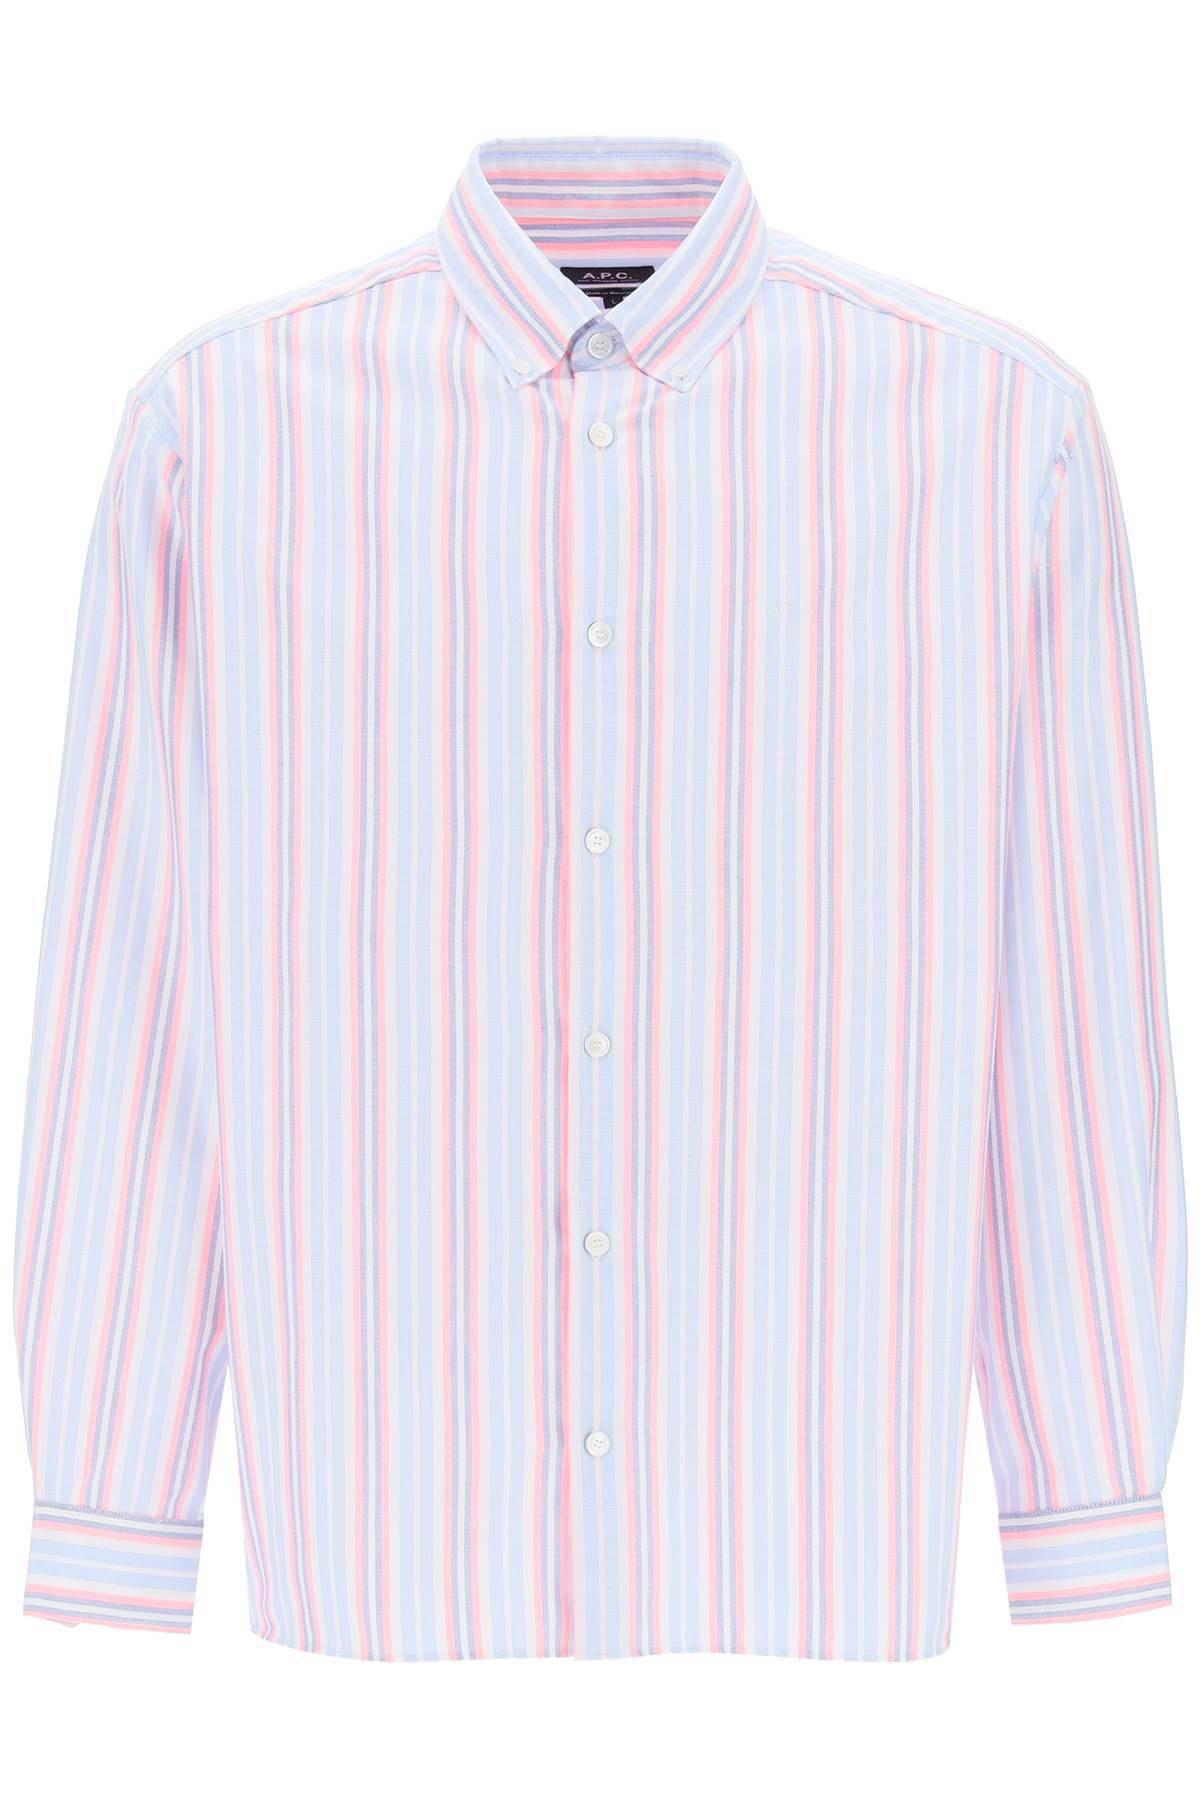 Shop Apc Mathias Striped Oxford Shirt In White,light Blue,pink,fluo